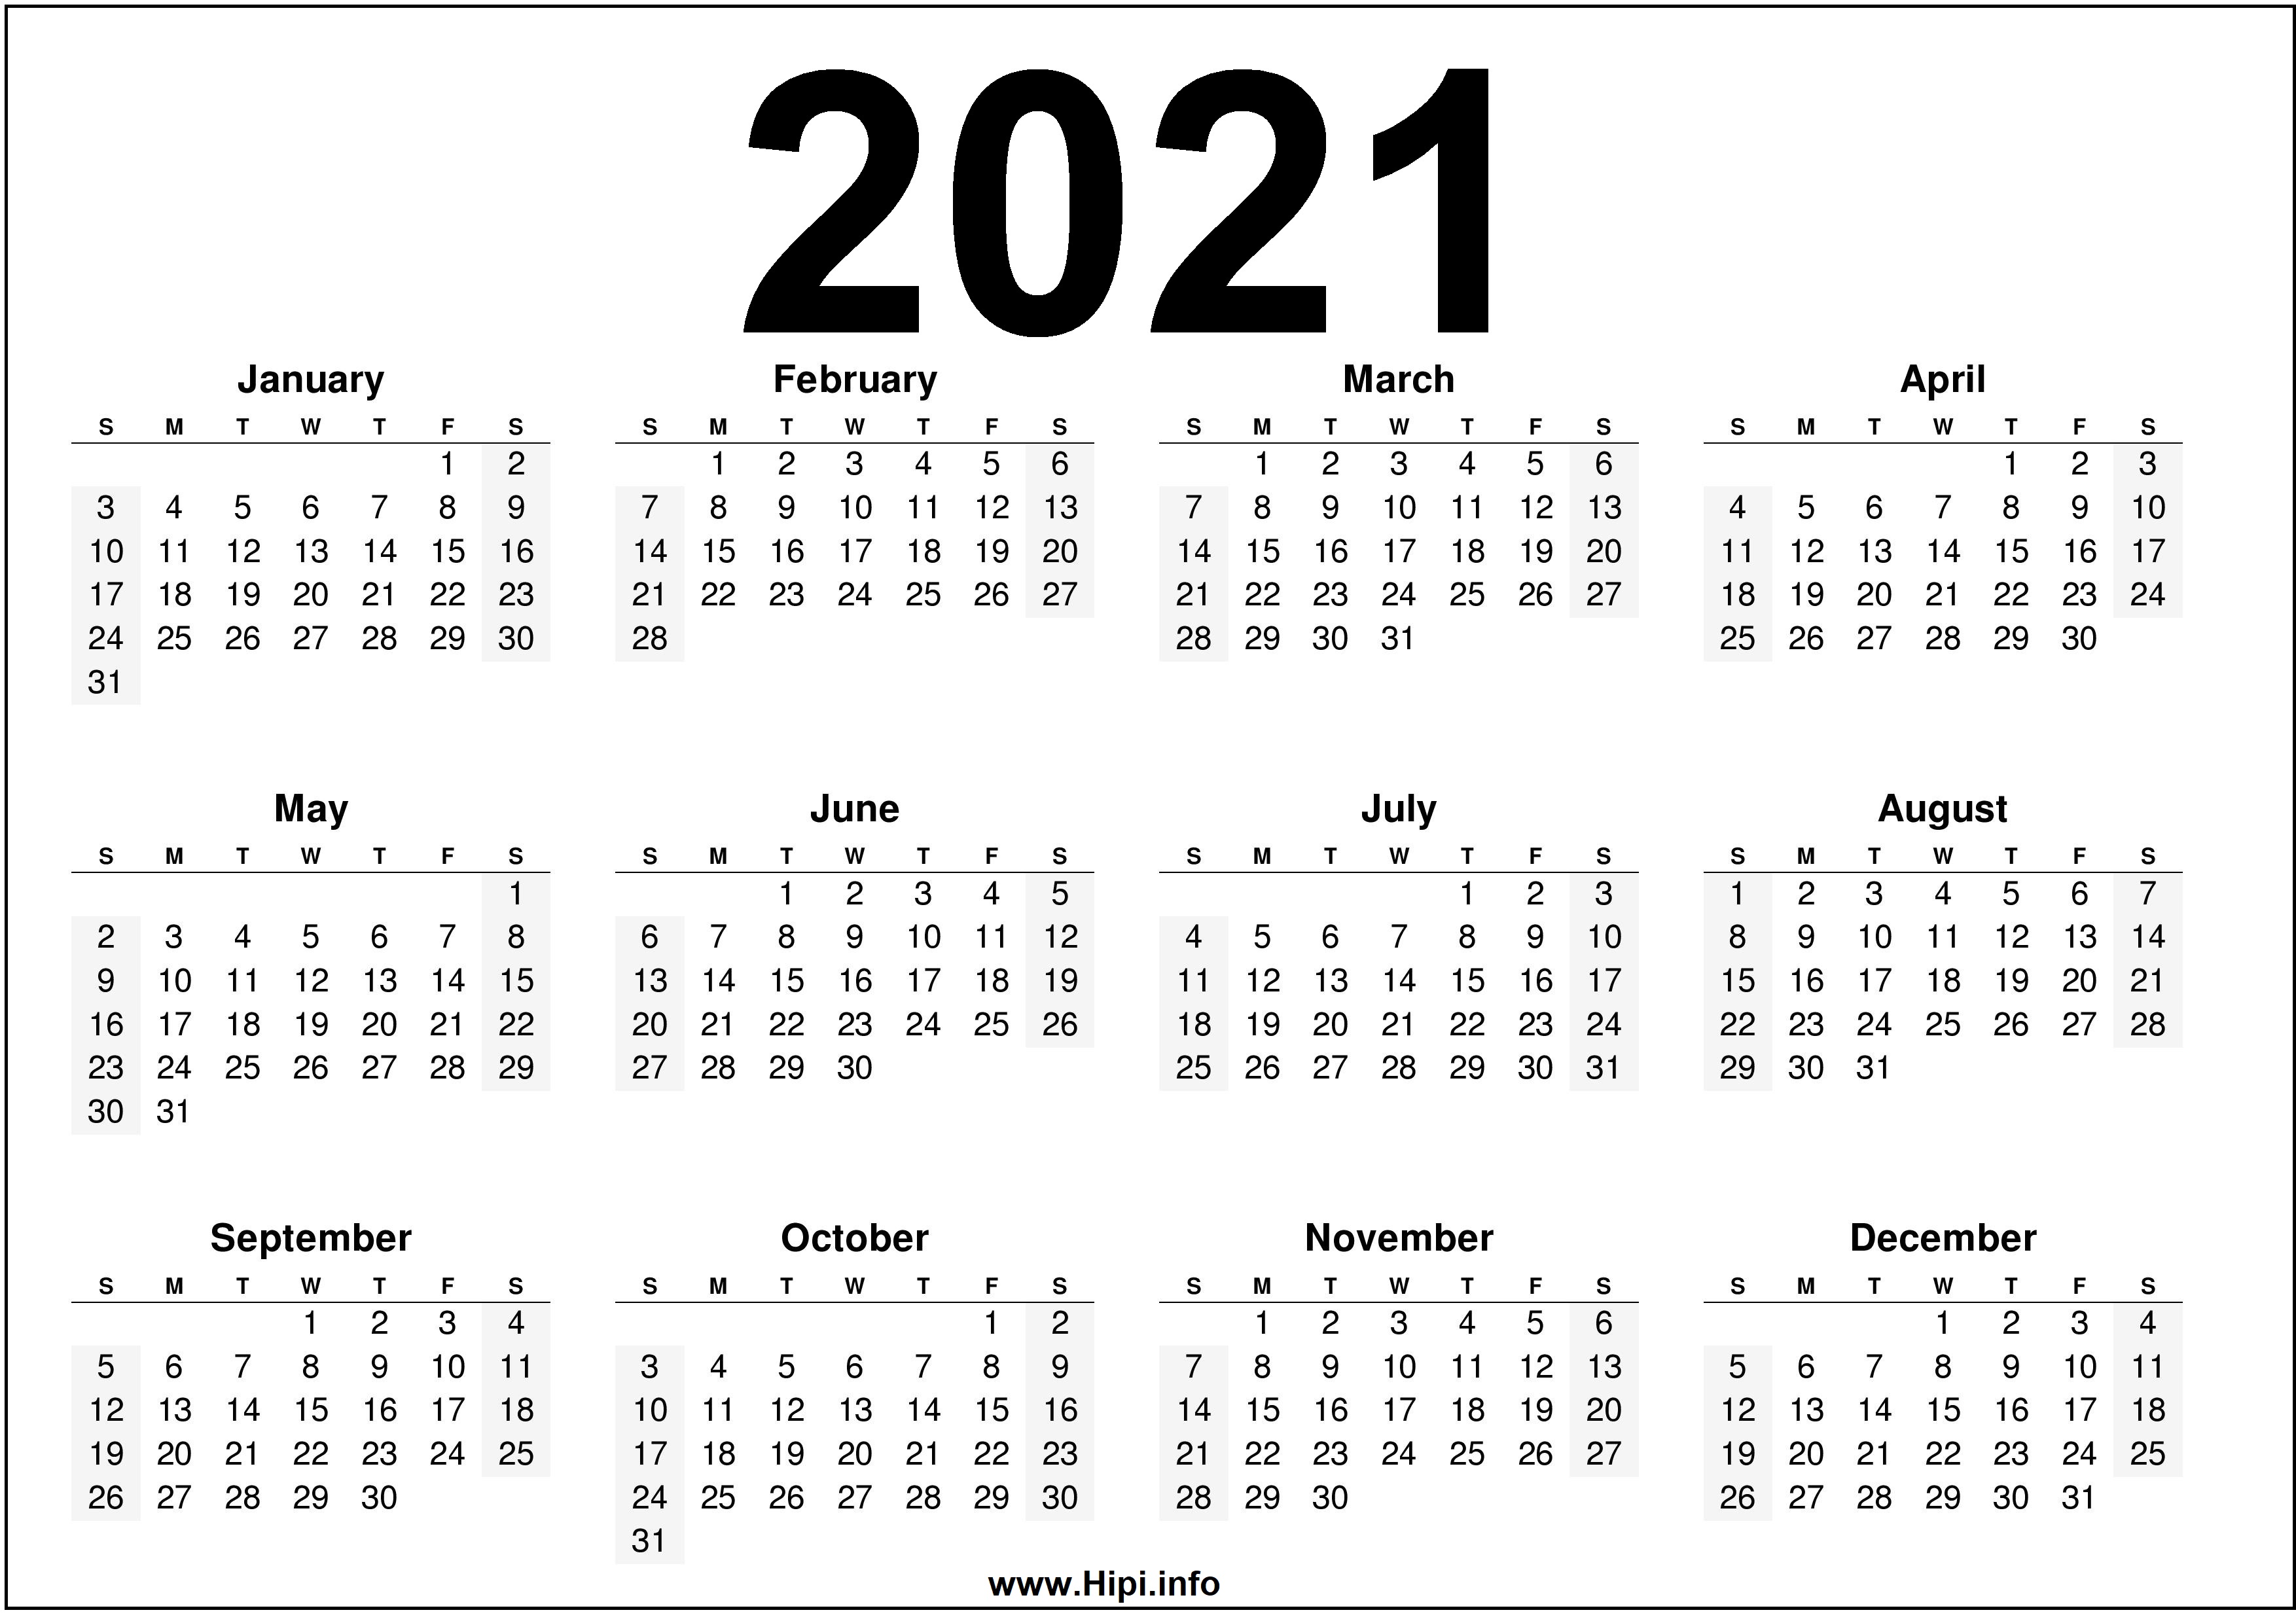 Free Printable Downloadable 2021 Calendars - Hipi.info